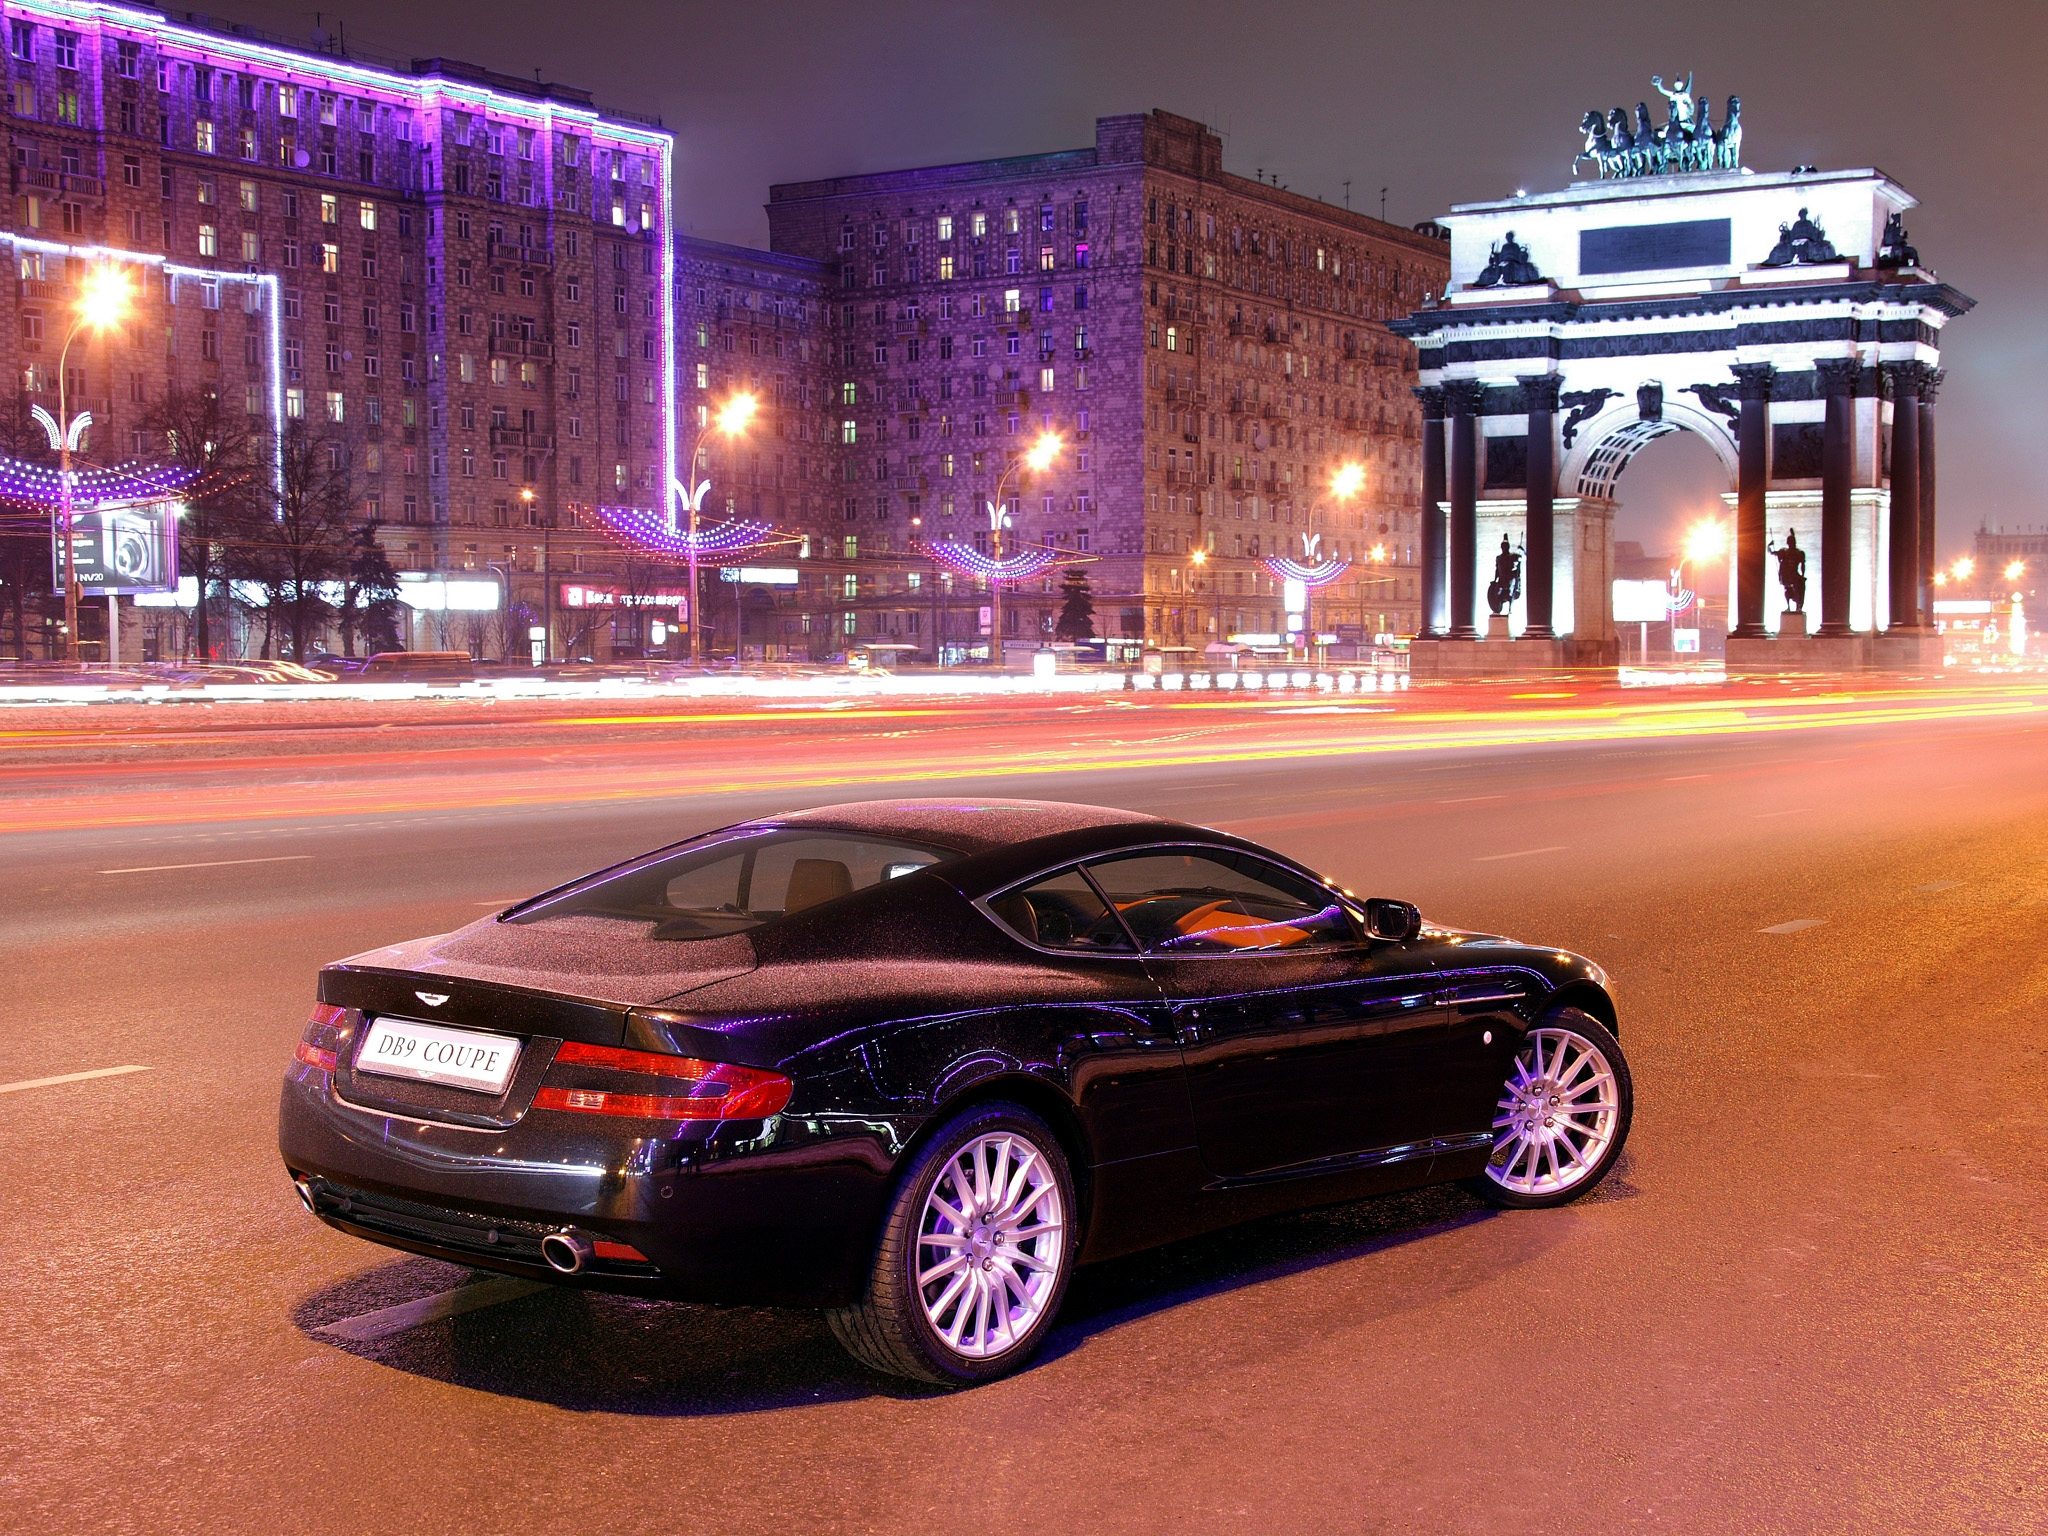 auto, aston martin, cars, black, city, building, lights, asphalt, side view, style, db9 1080p